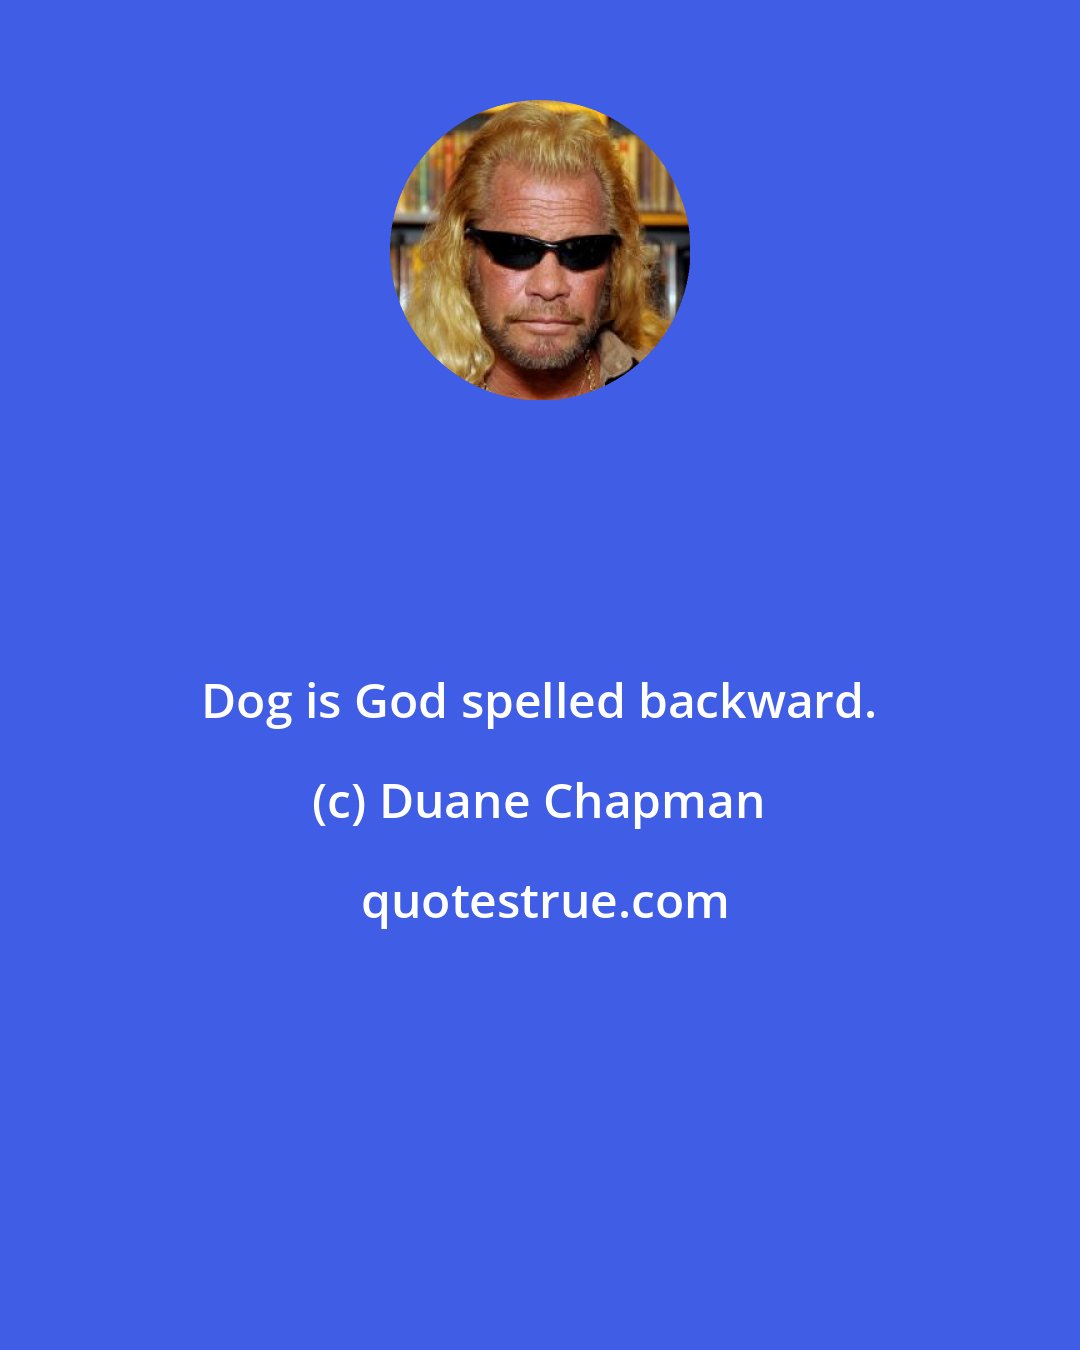 Duane Chapman: Dog is God spelled backward.